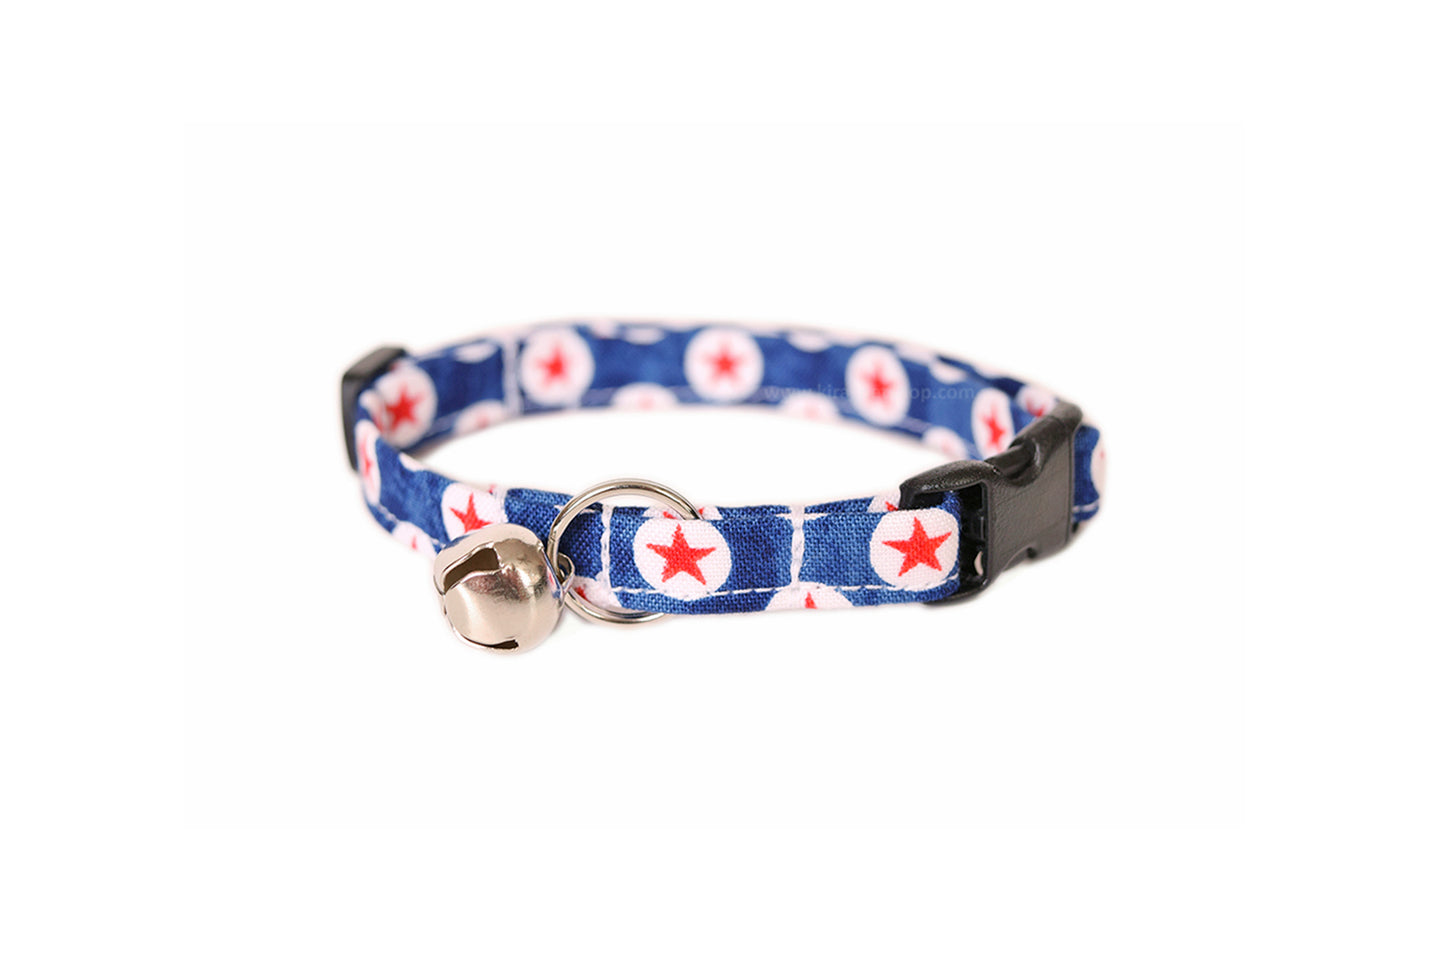 Patriotic Cat Collar - Blue, White & Red Stars - 4th of July Breakaway Cat Collar - Handmade by Kira's Pet Shop